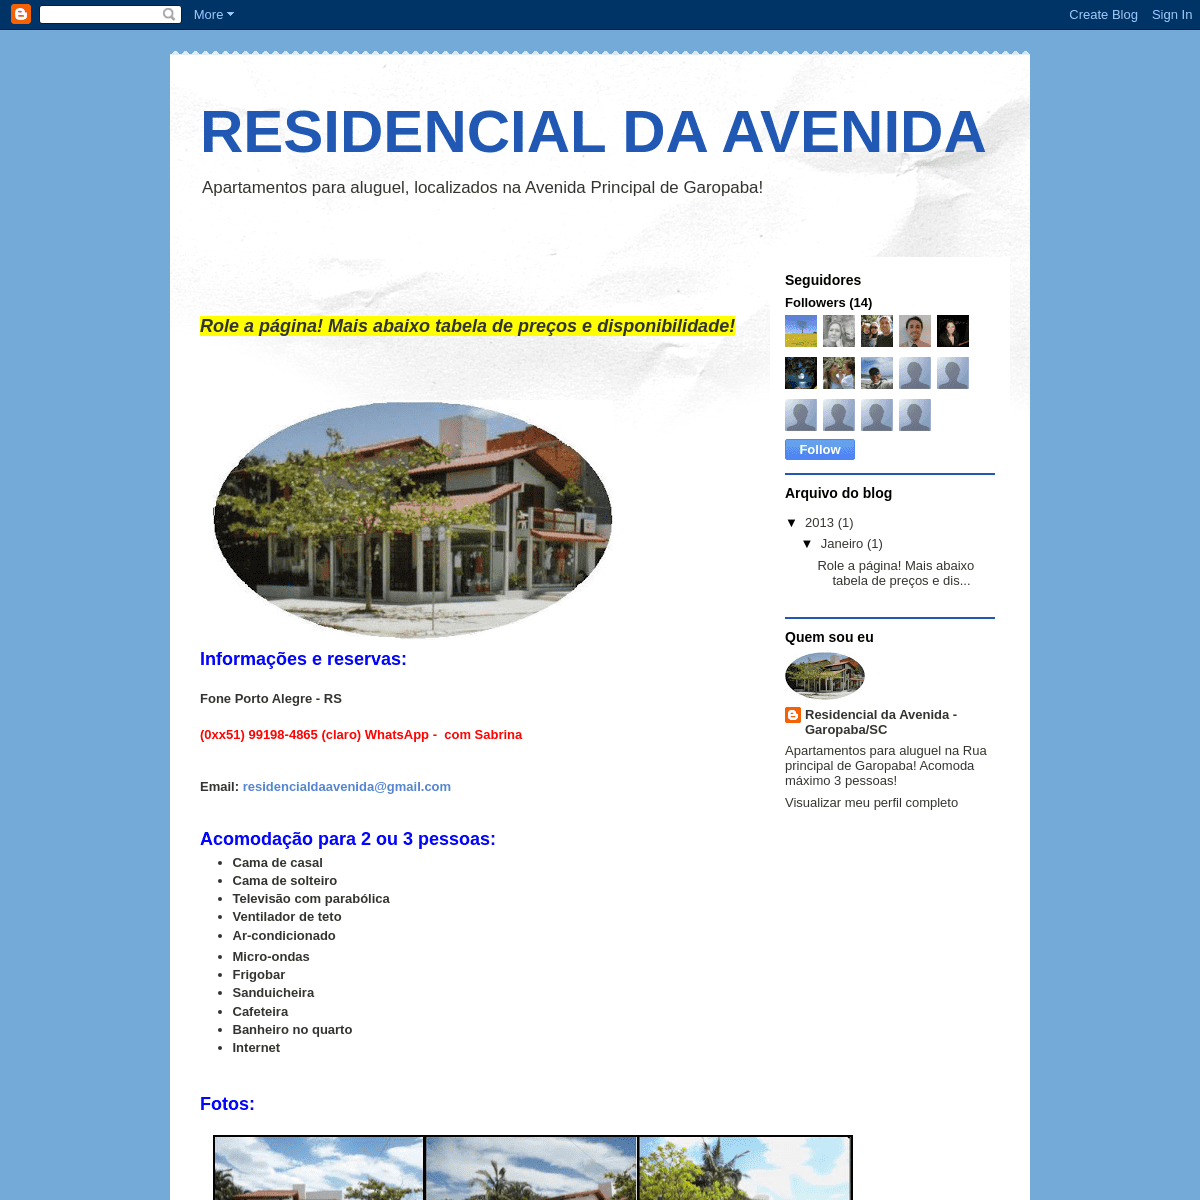 A complete backup of residencialdaavenida.blogspot.com